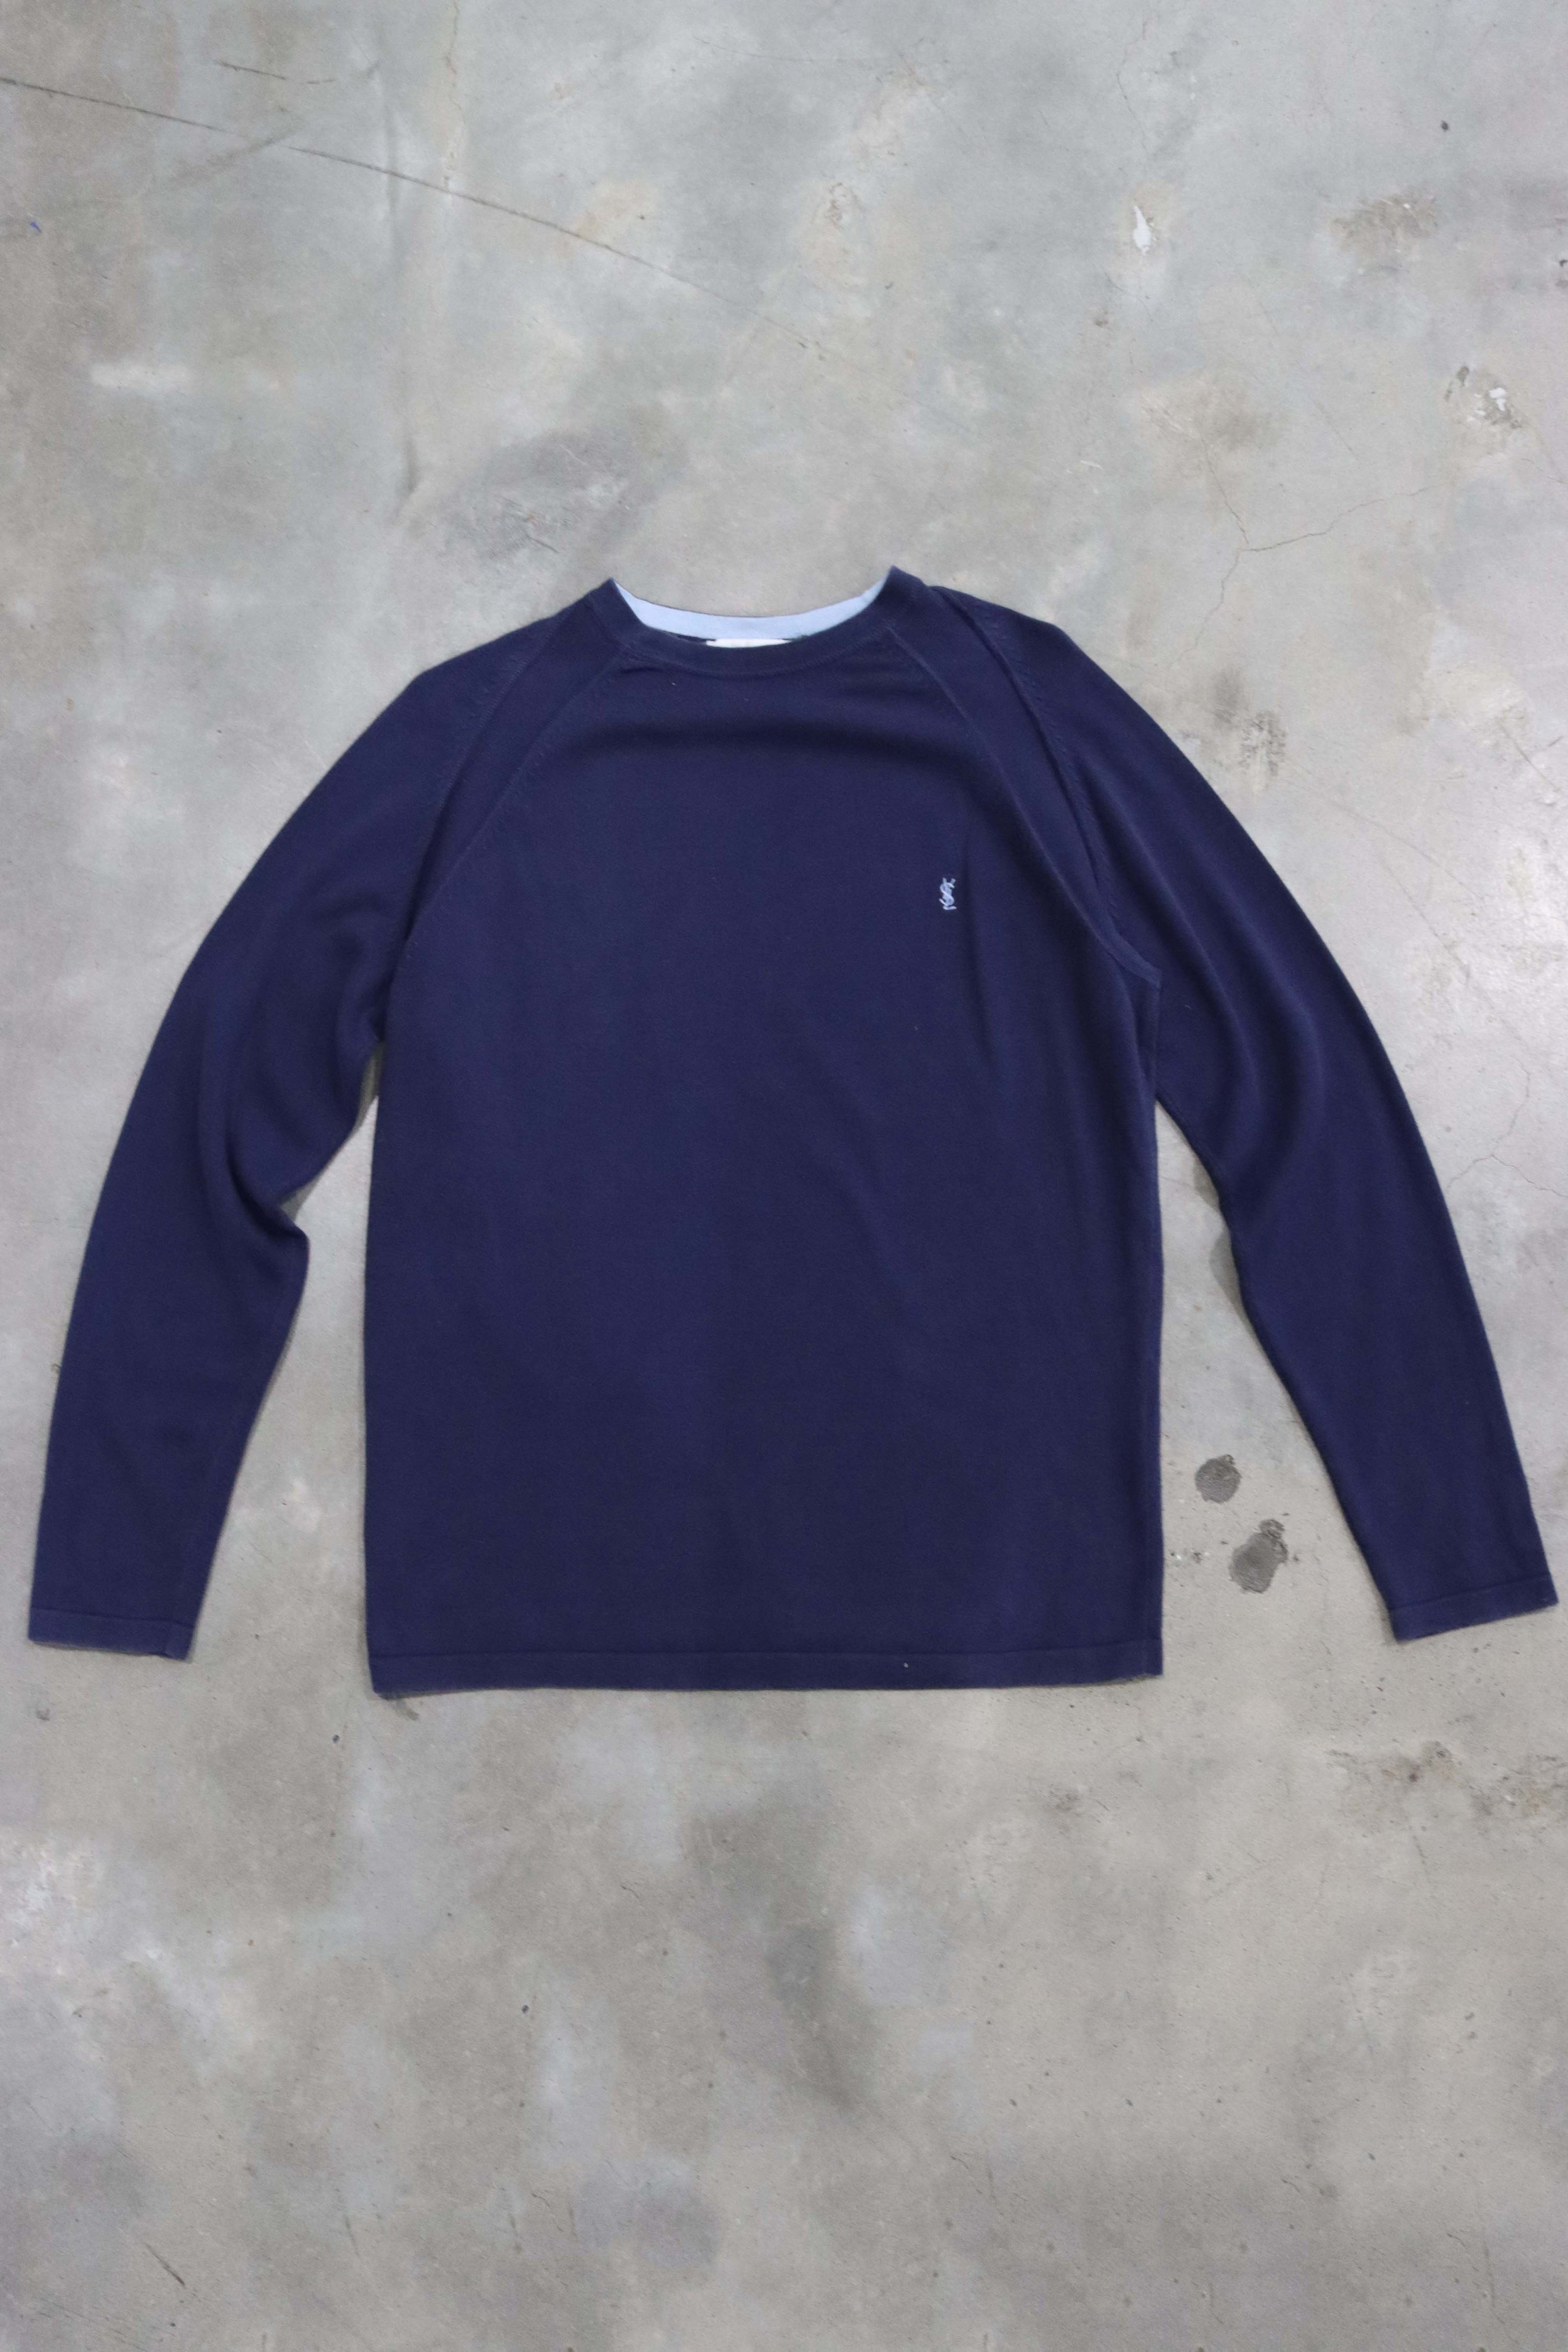 Vintage YSL Navy Crewneck Sweater